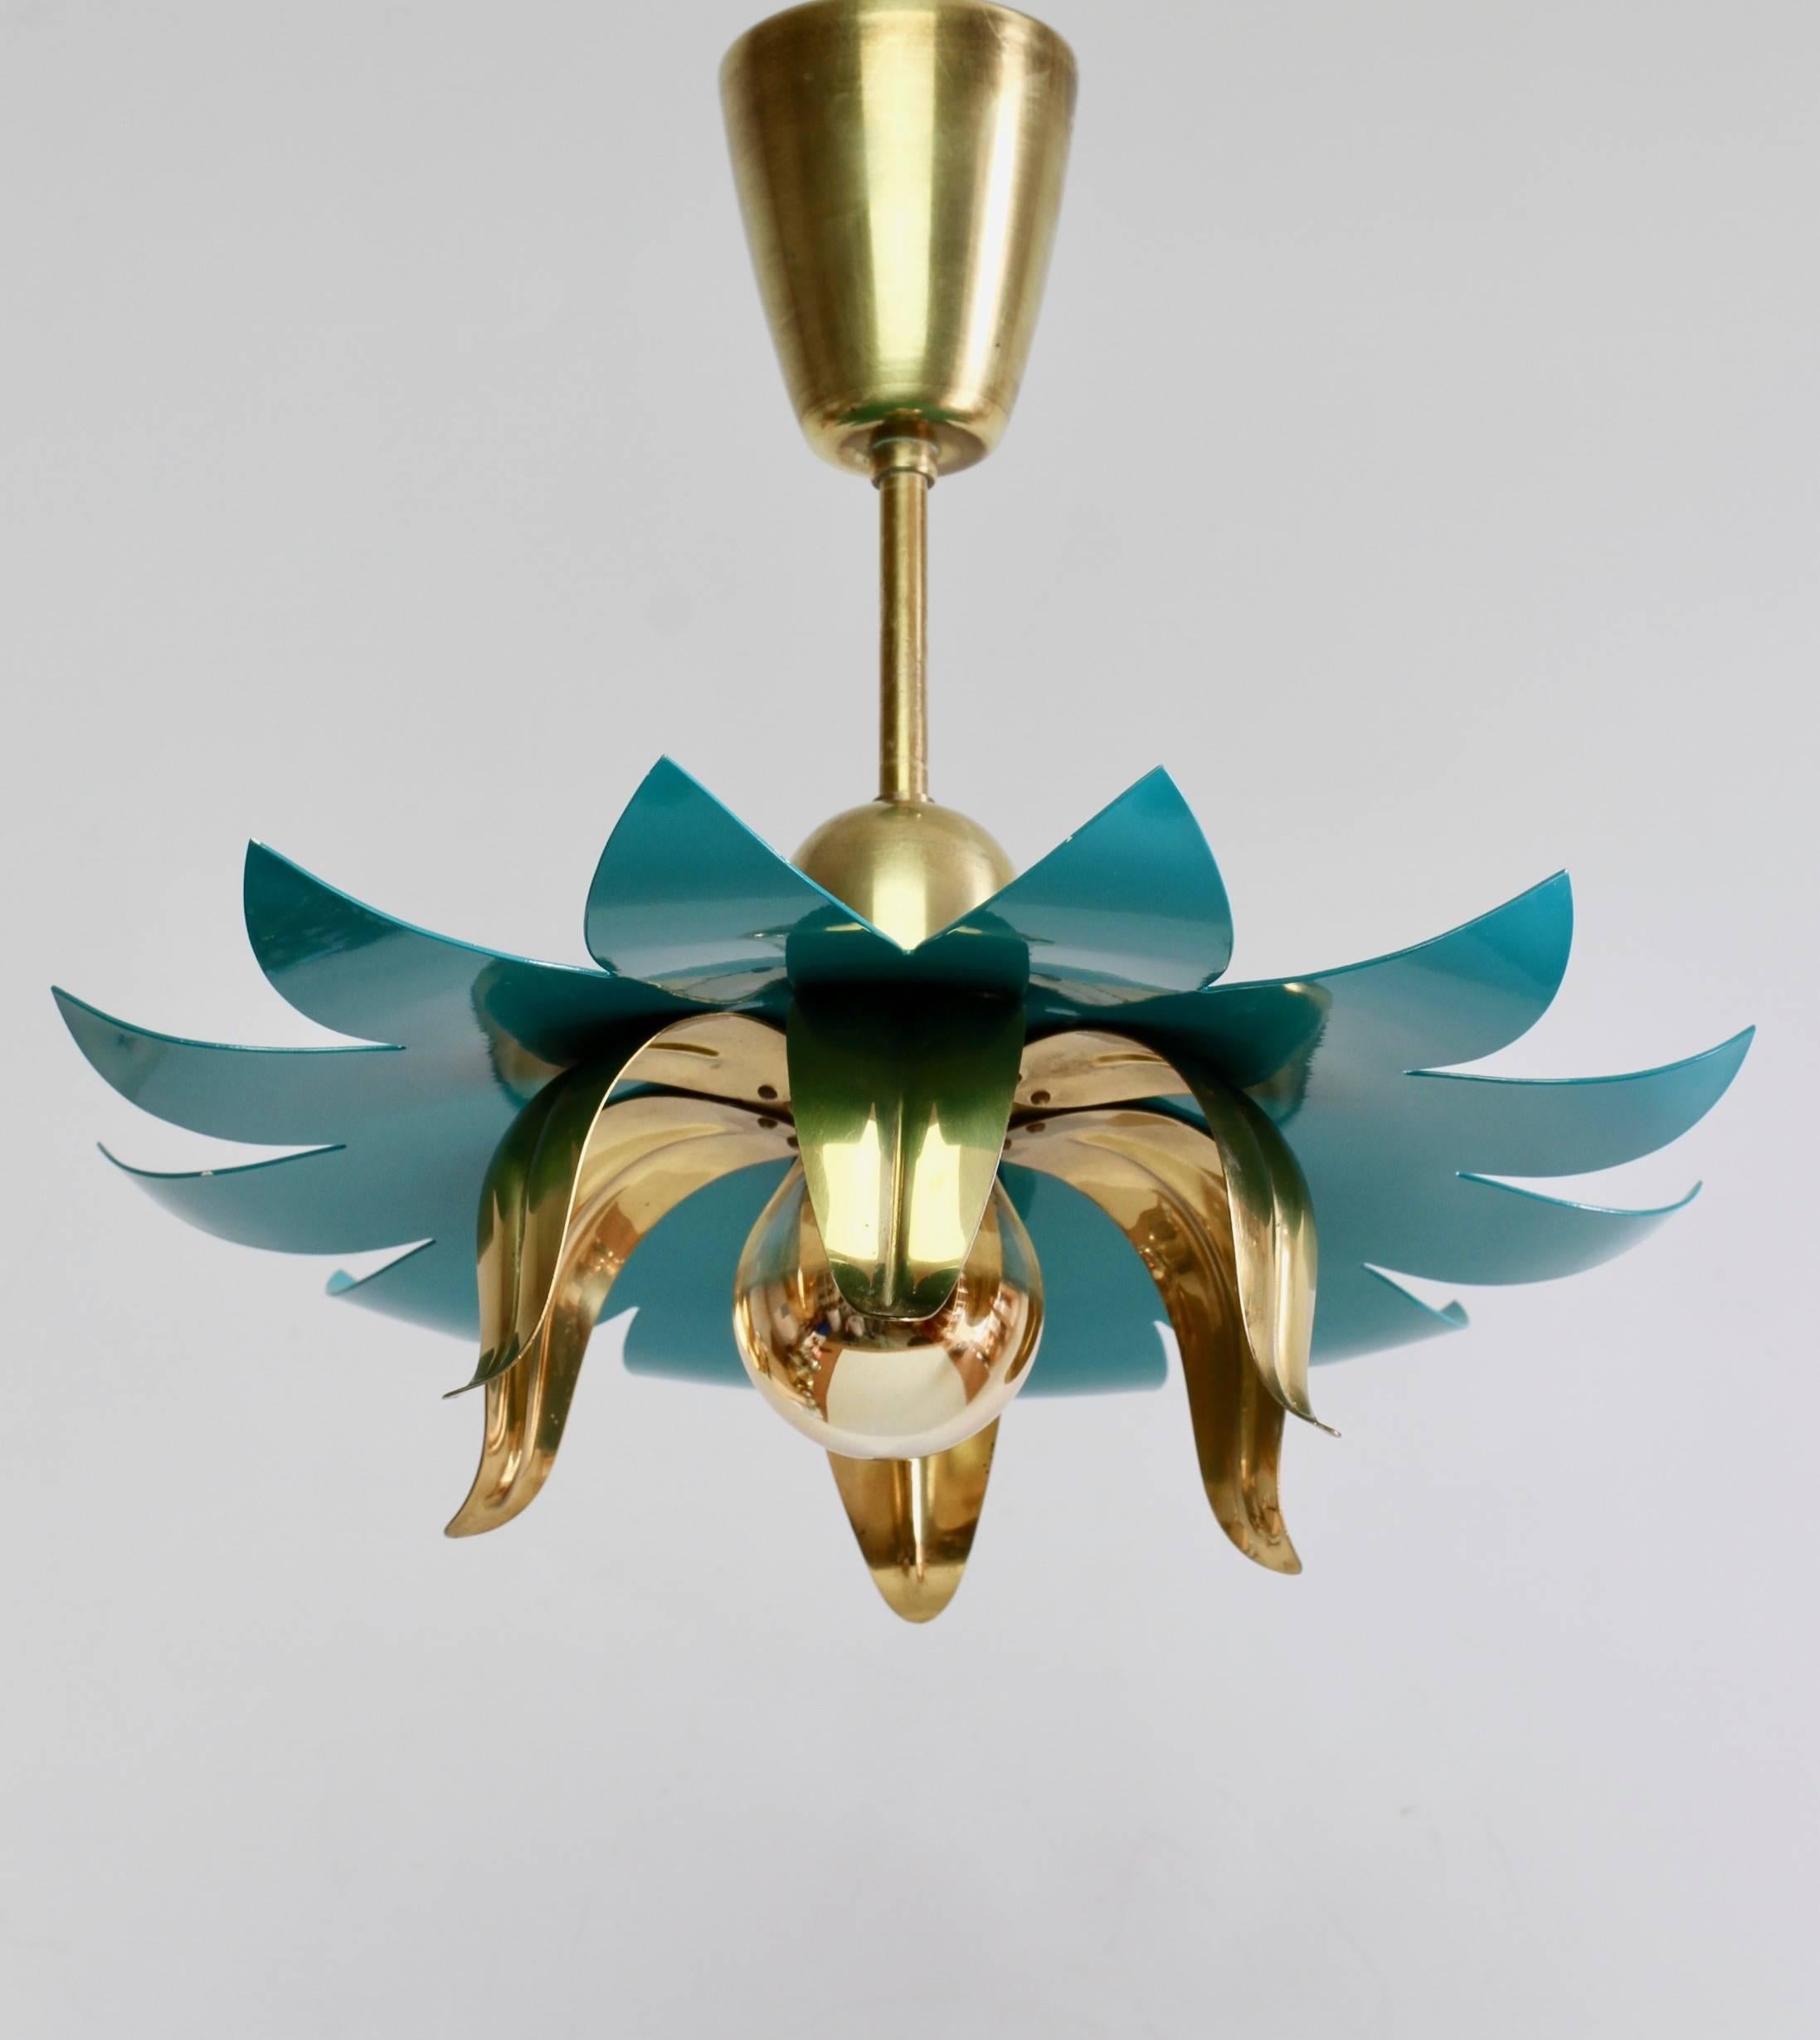 Painted 1950s Italian Stilnovo Style Brass and Turquoise Flower Pendant Light Fixture